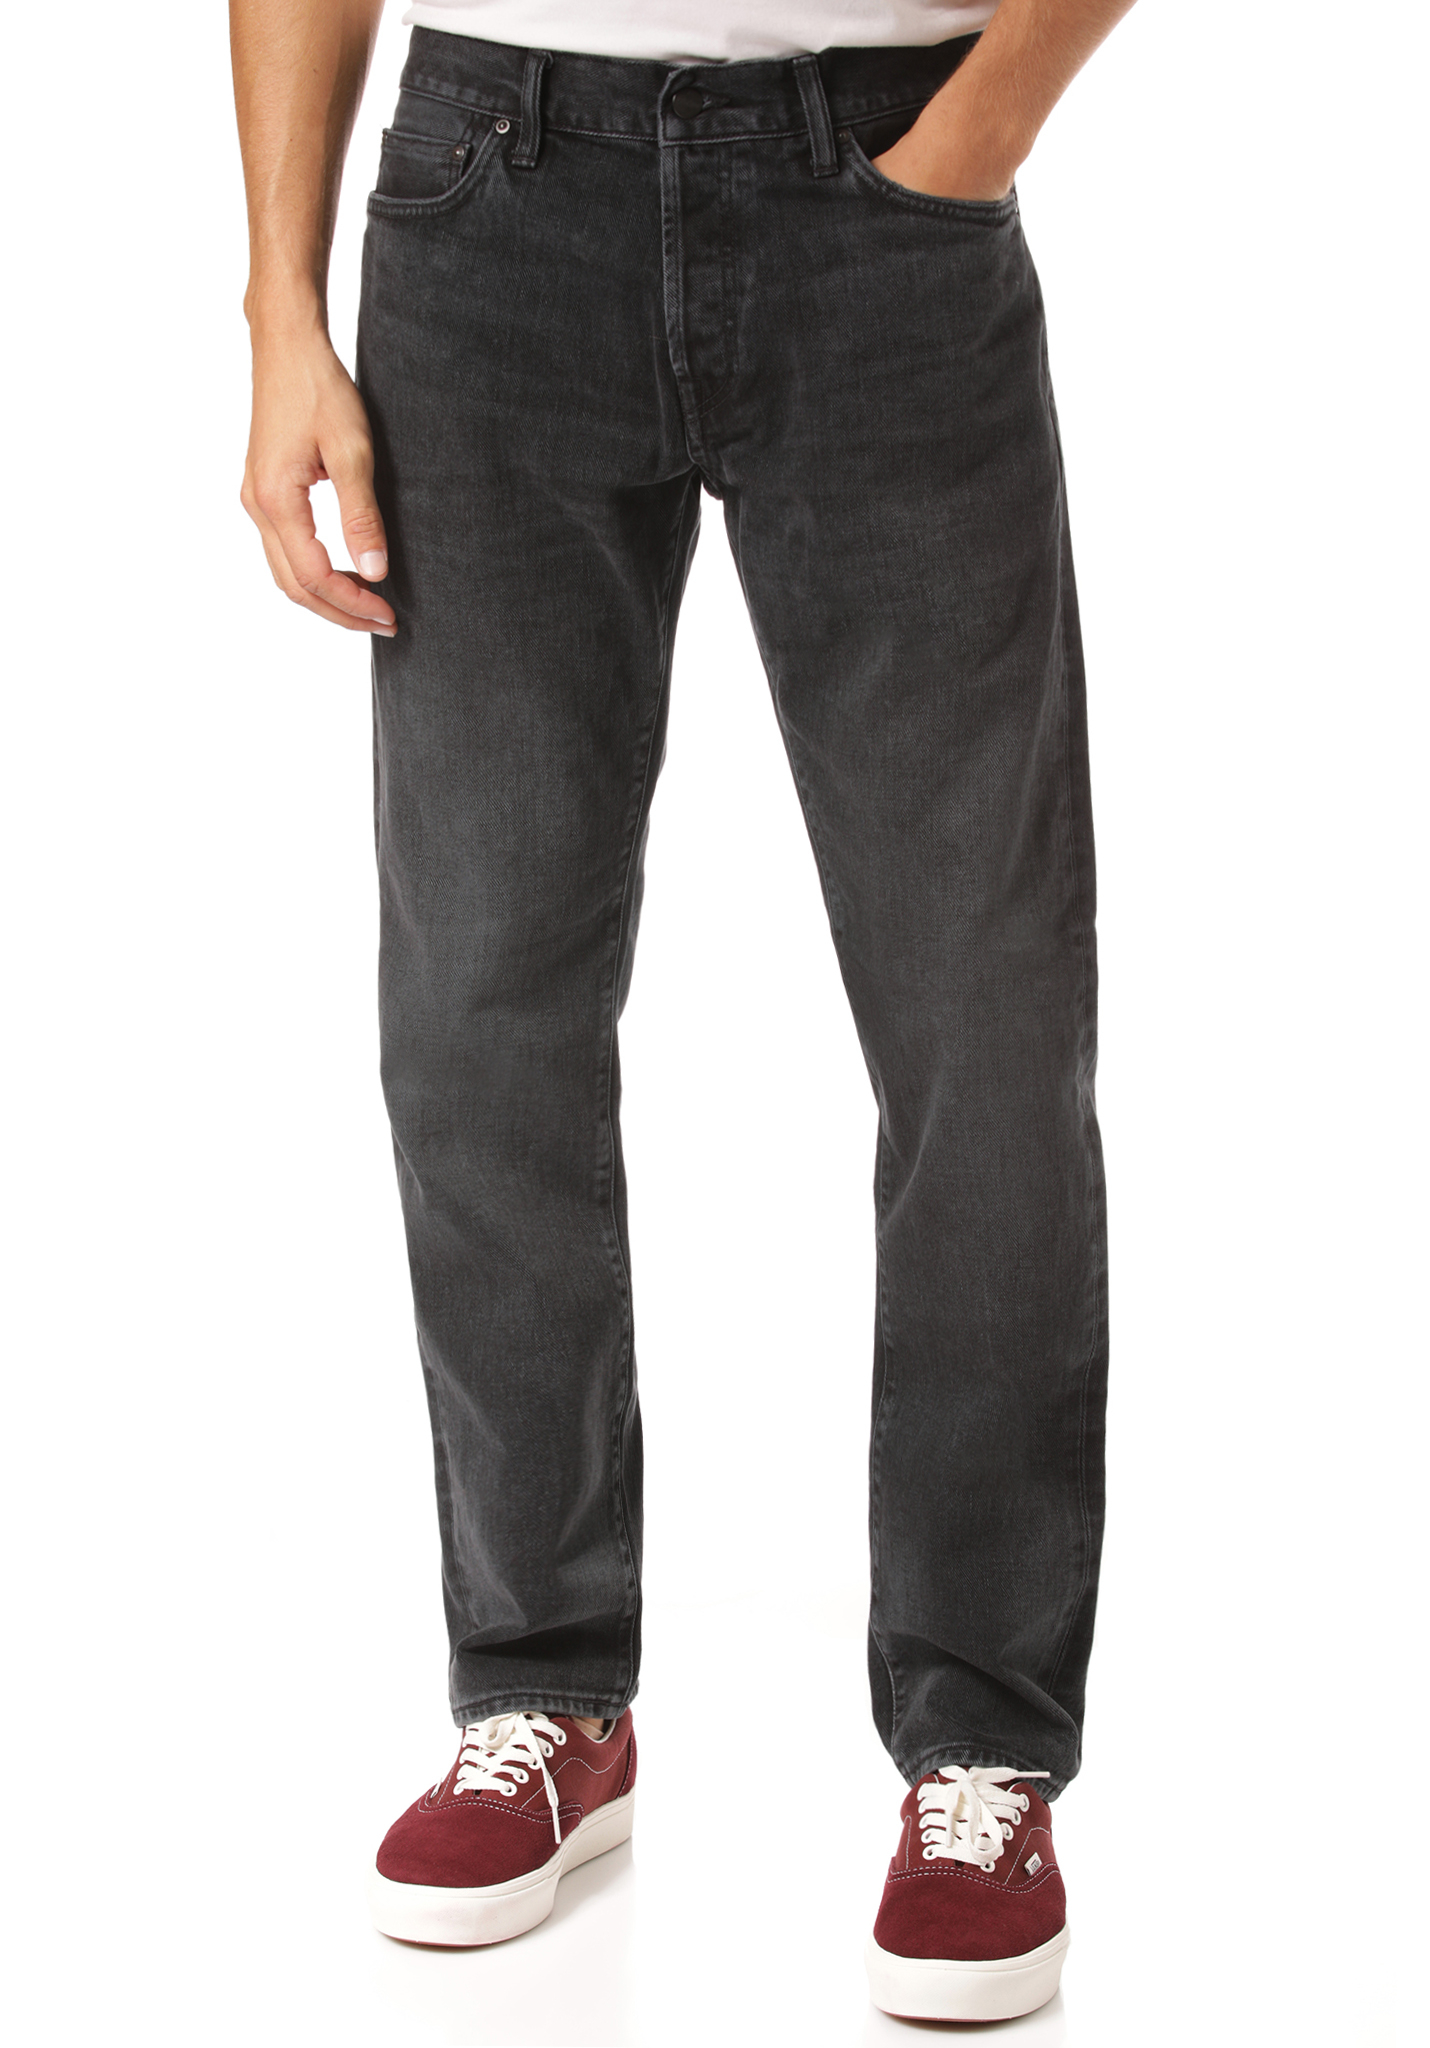 Carhartt WIP Klondike Jeans black mid worn wash 38/34